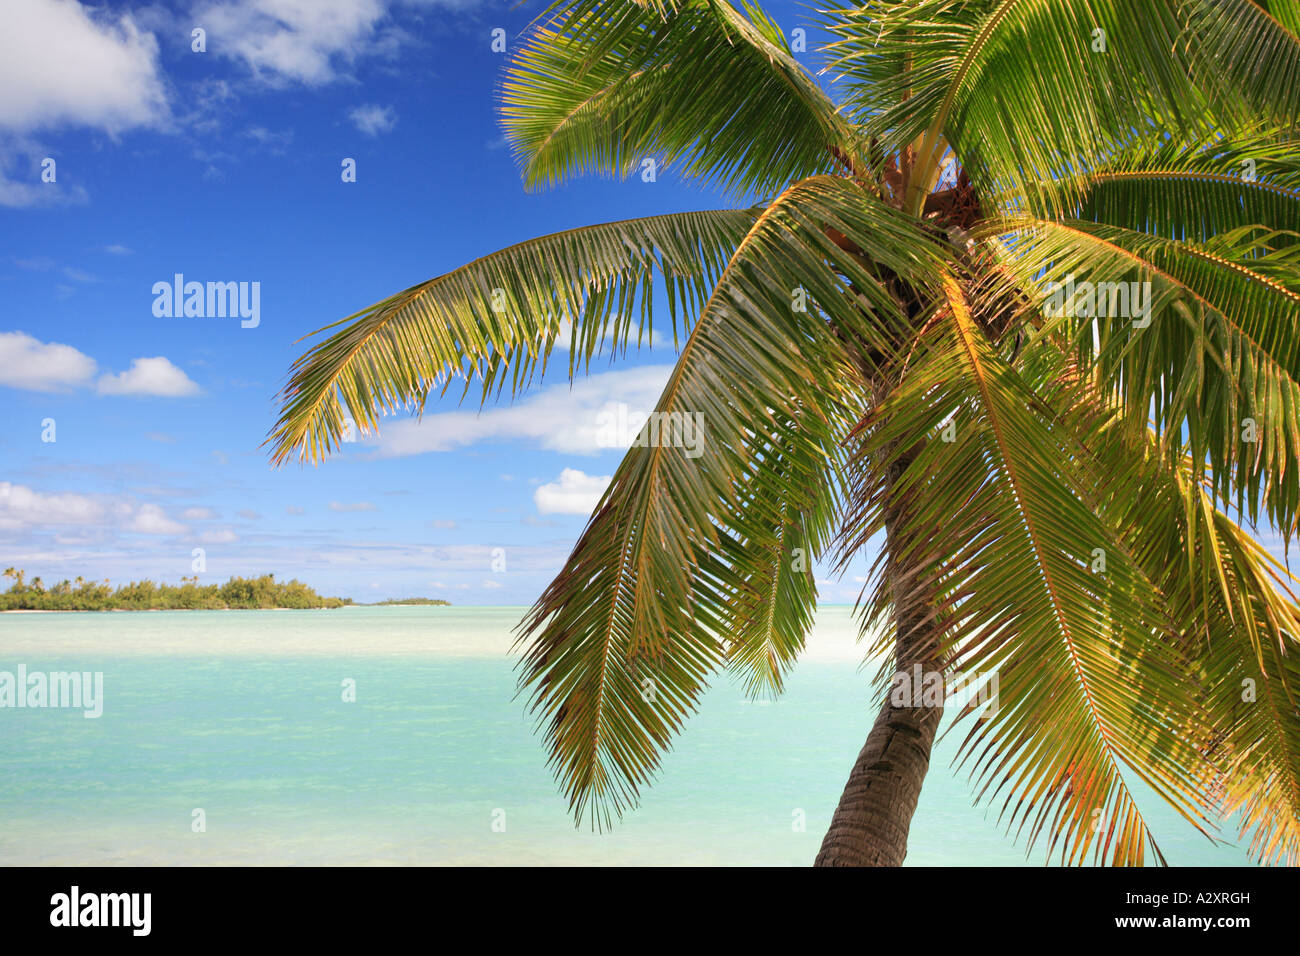 Palm tree lined beach Aitutaki Cook islands Polynesia Stock Photo